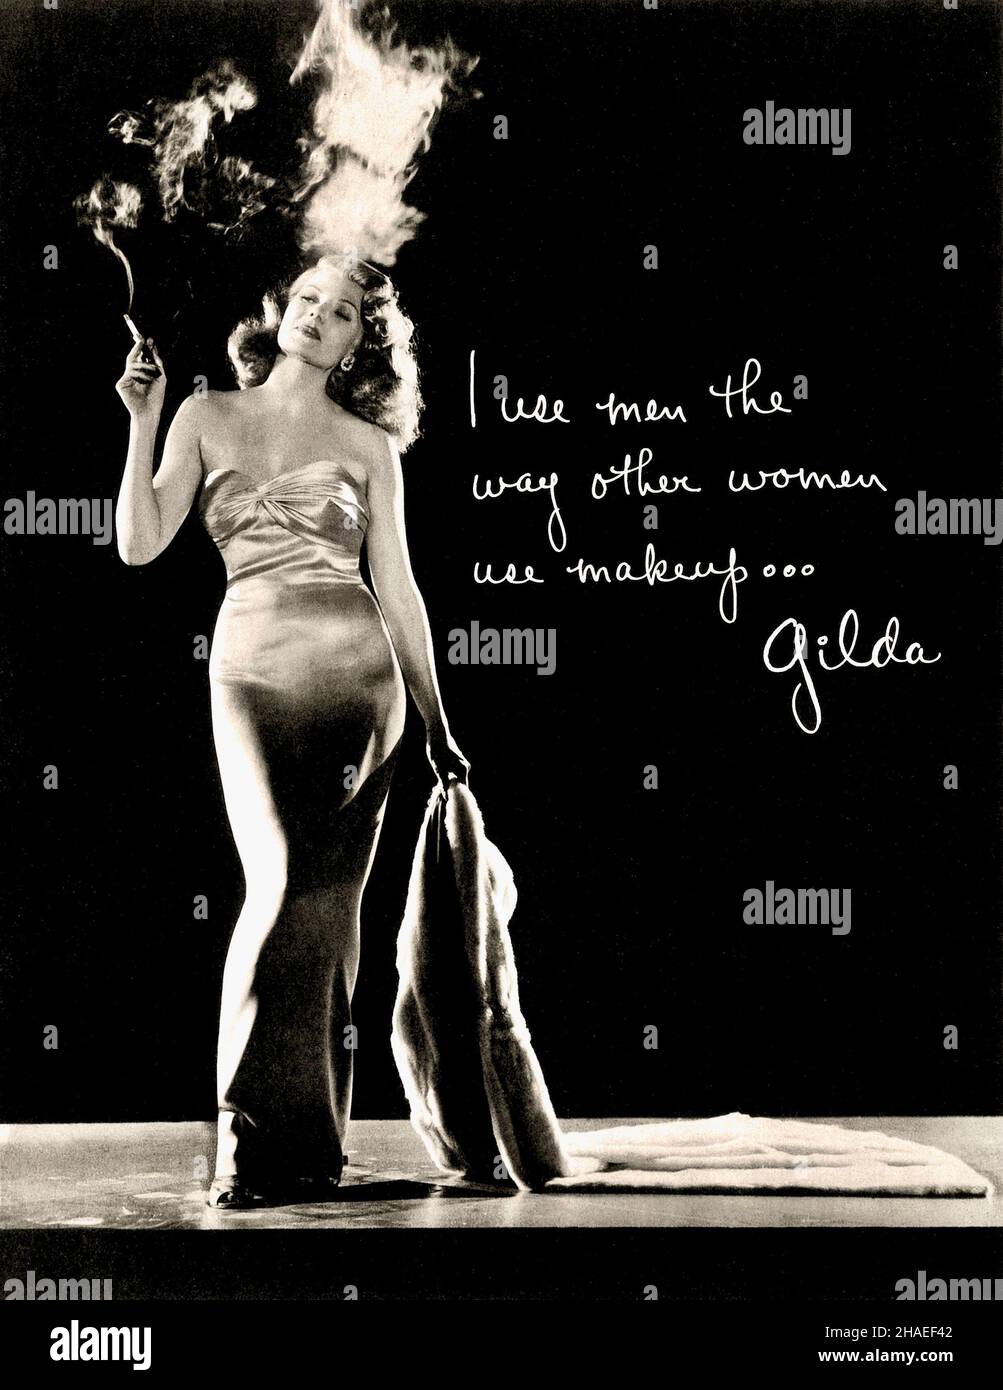 Rita Hayworth - Gilda - Photograph by Robert Coburn - 'I use men the way other women use make up' Stock Photo